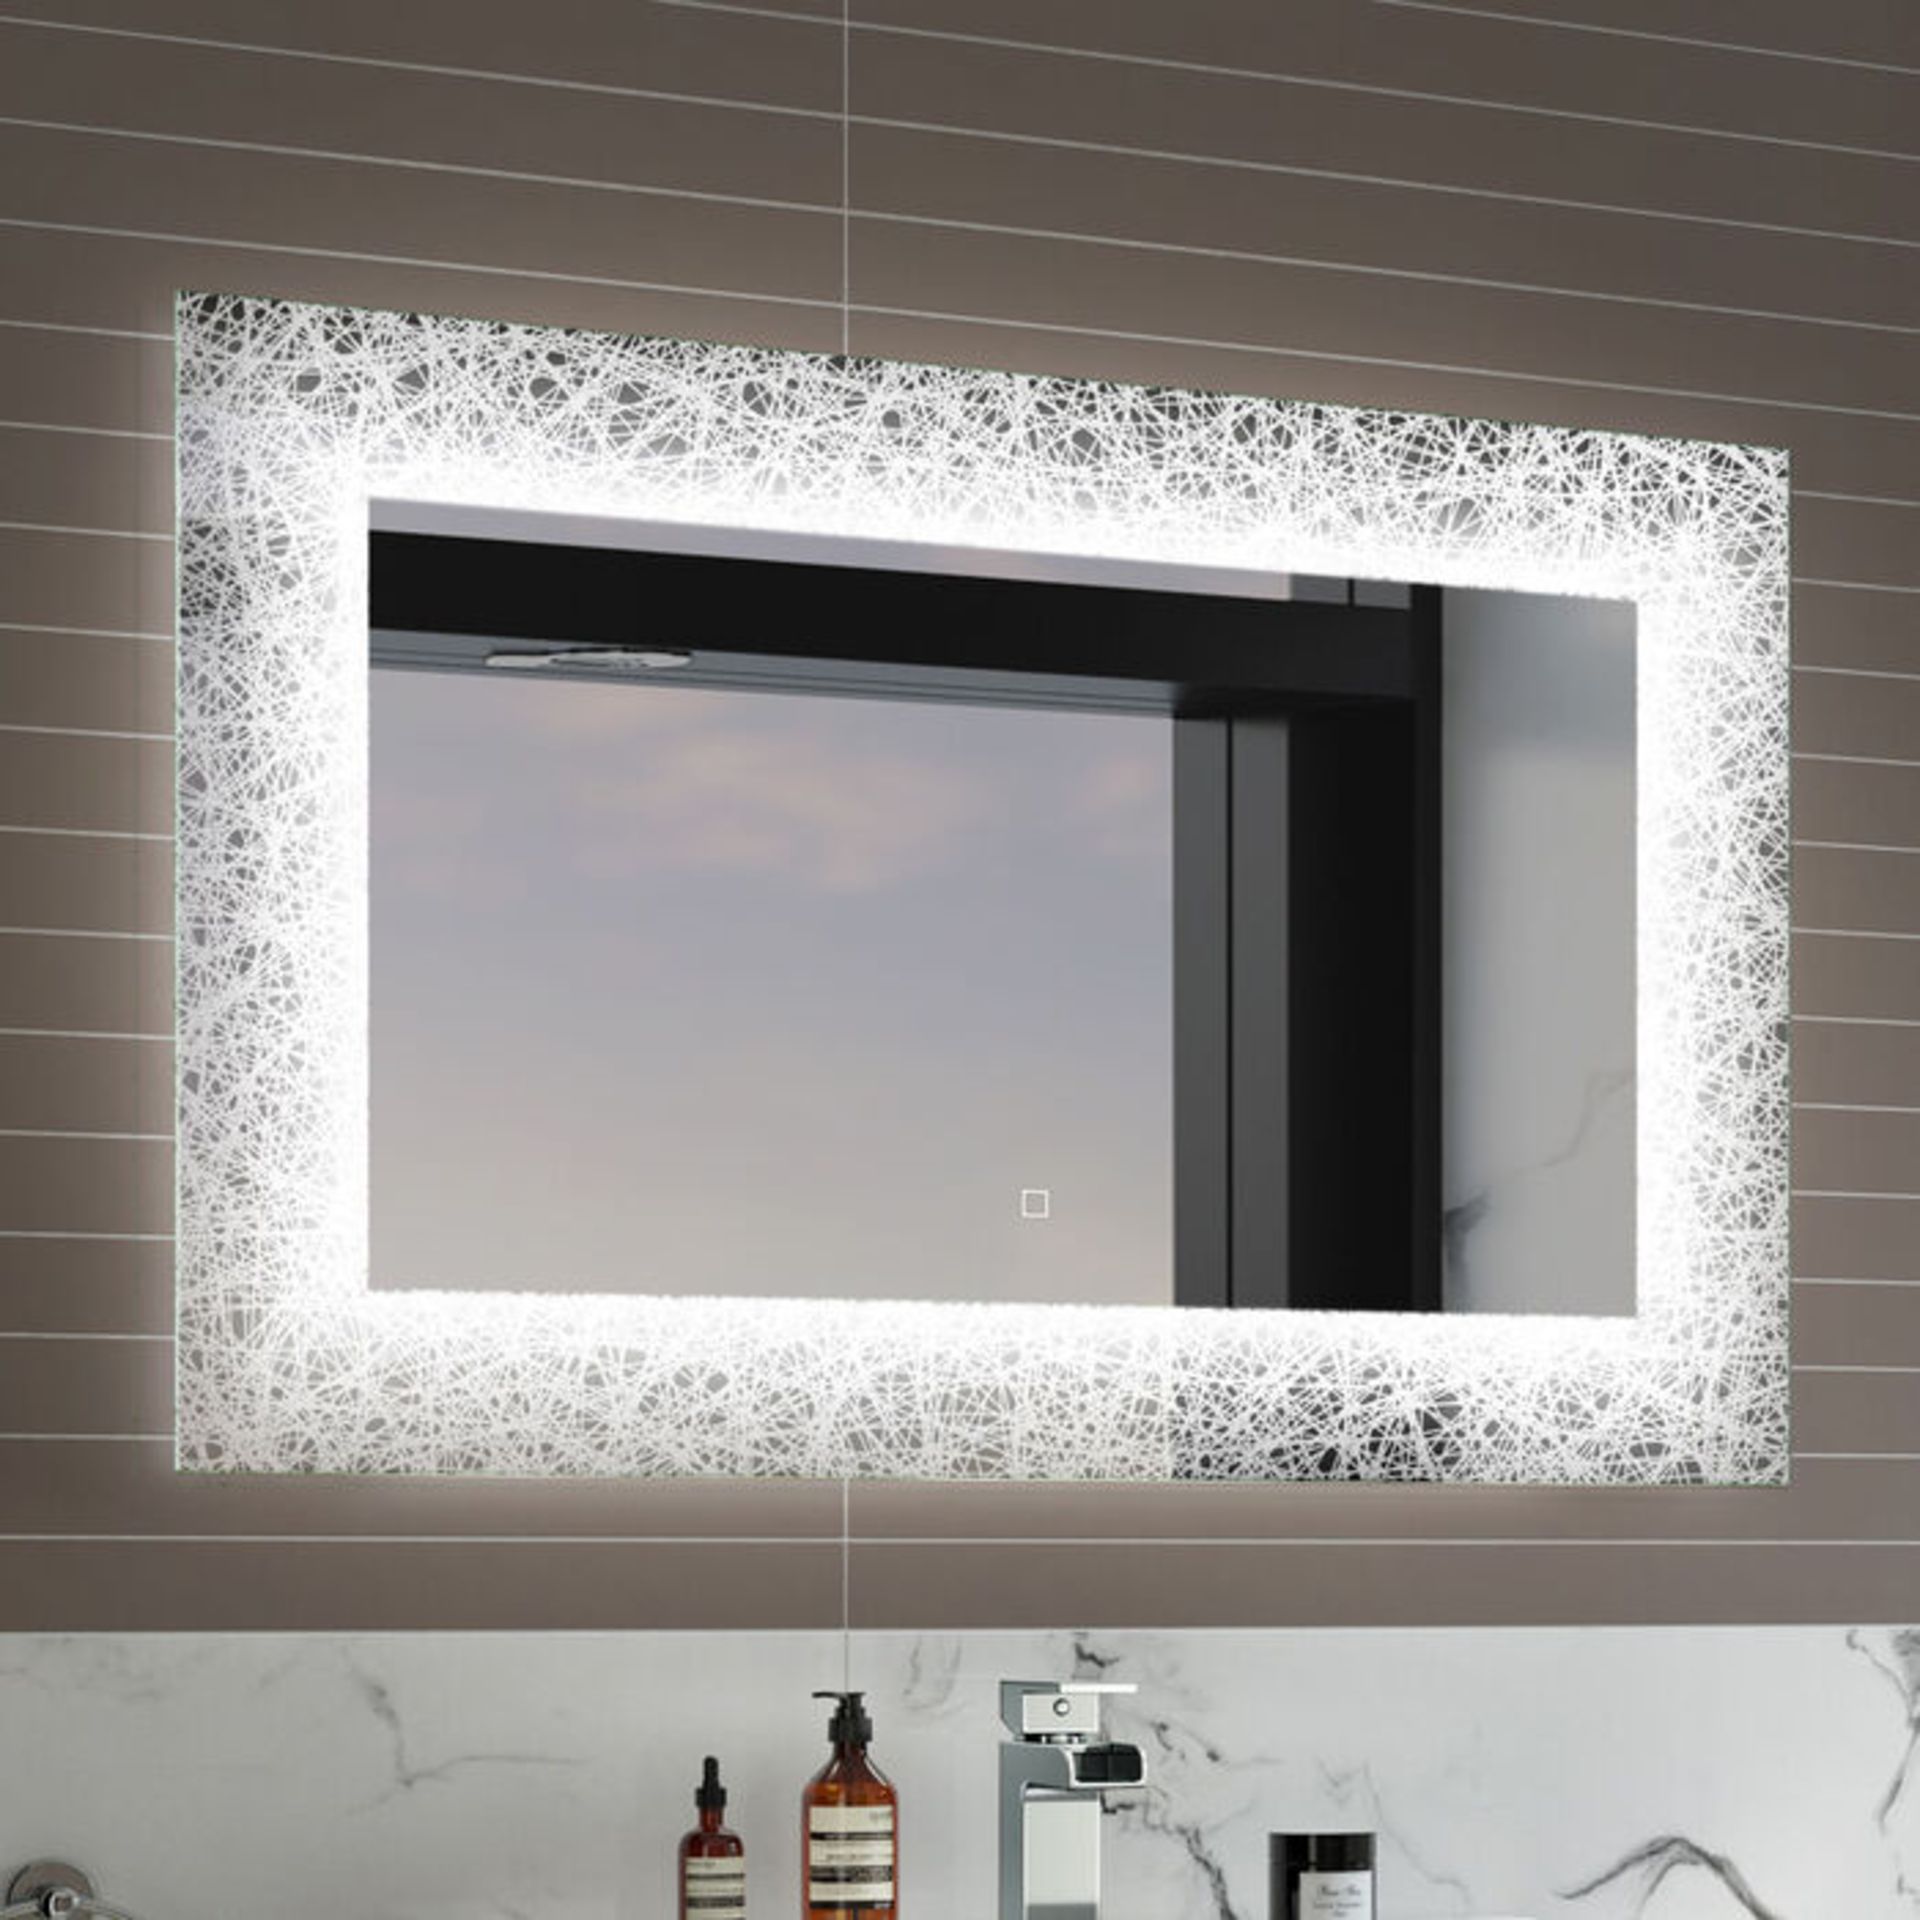 (TT6) 900x600mm Celestial Designer Illuminated LED Mirror - Switch Control. RRP £399.99. We lo... - Image 5 of 6